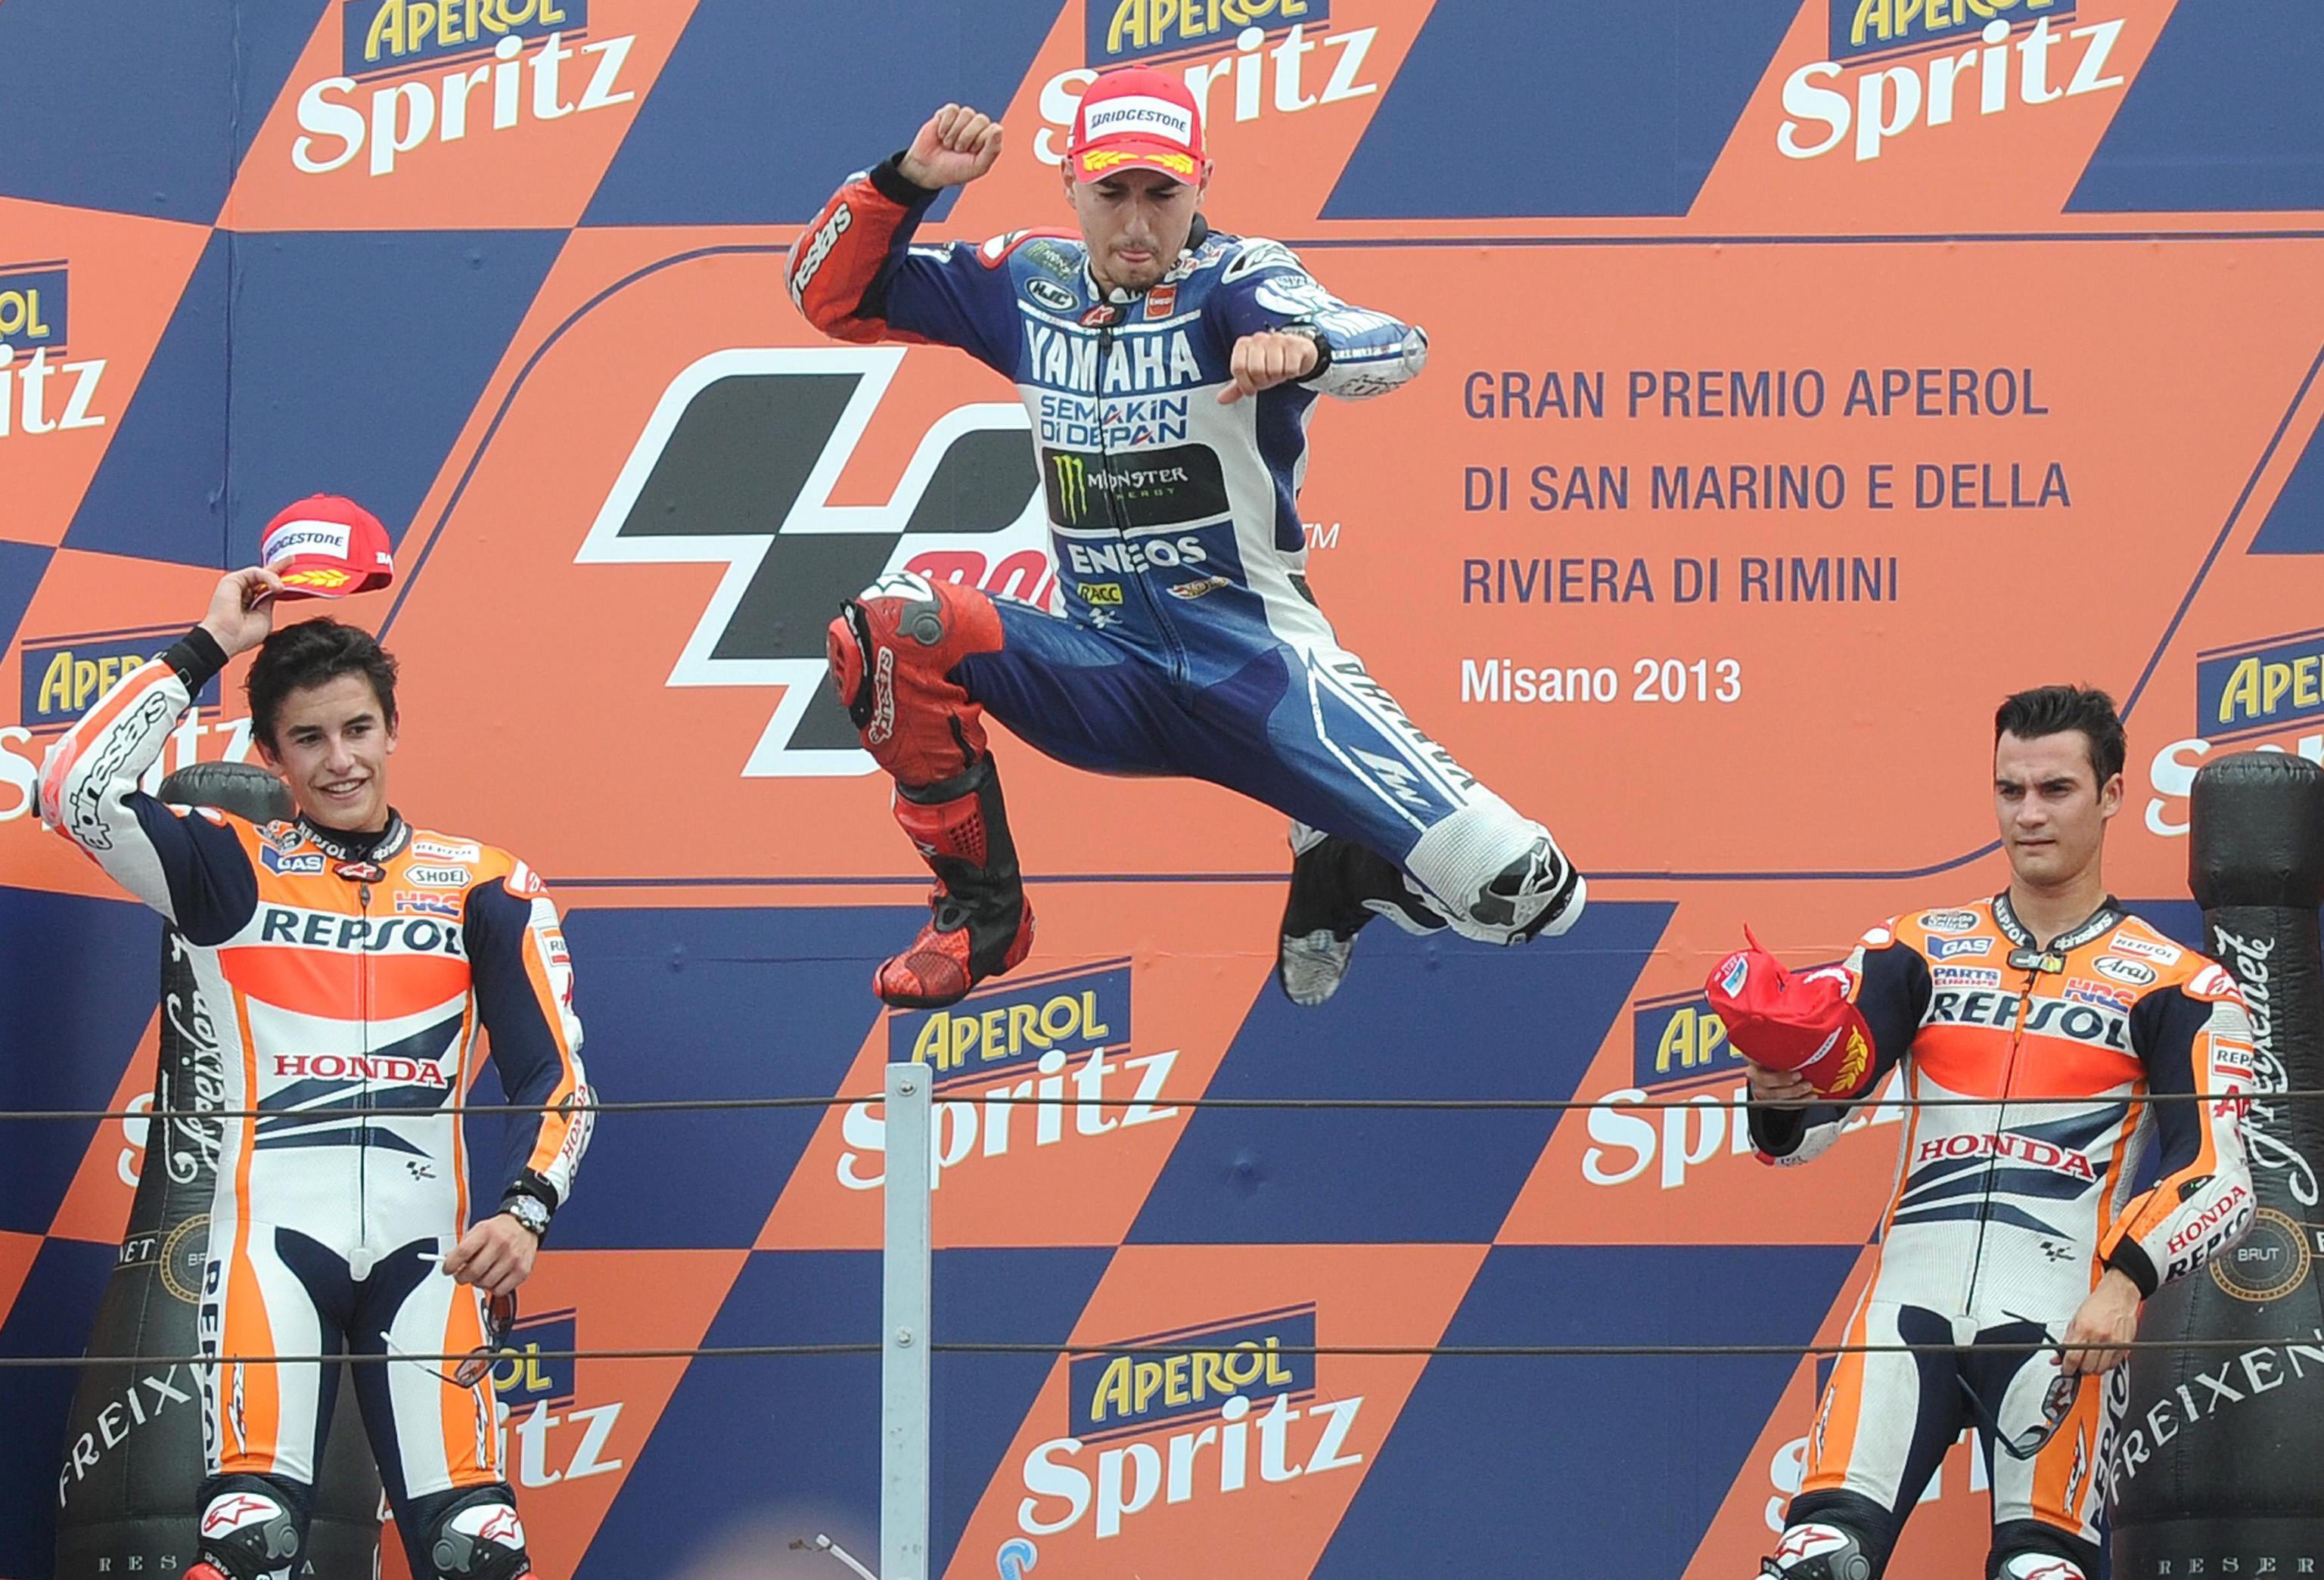 MotoGP - San Marino 2013: Εύκολη νίκη για τον J. Lorenzo, μεγάλη μάχη των δύο Honda